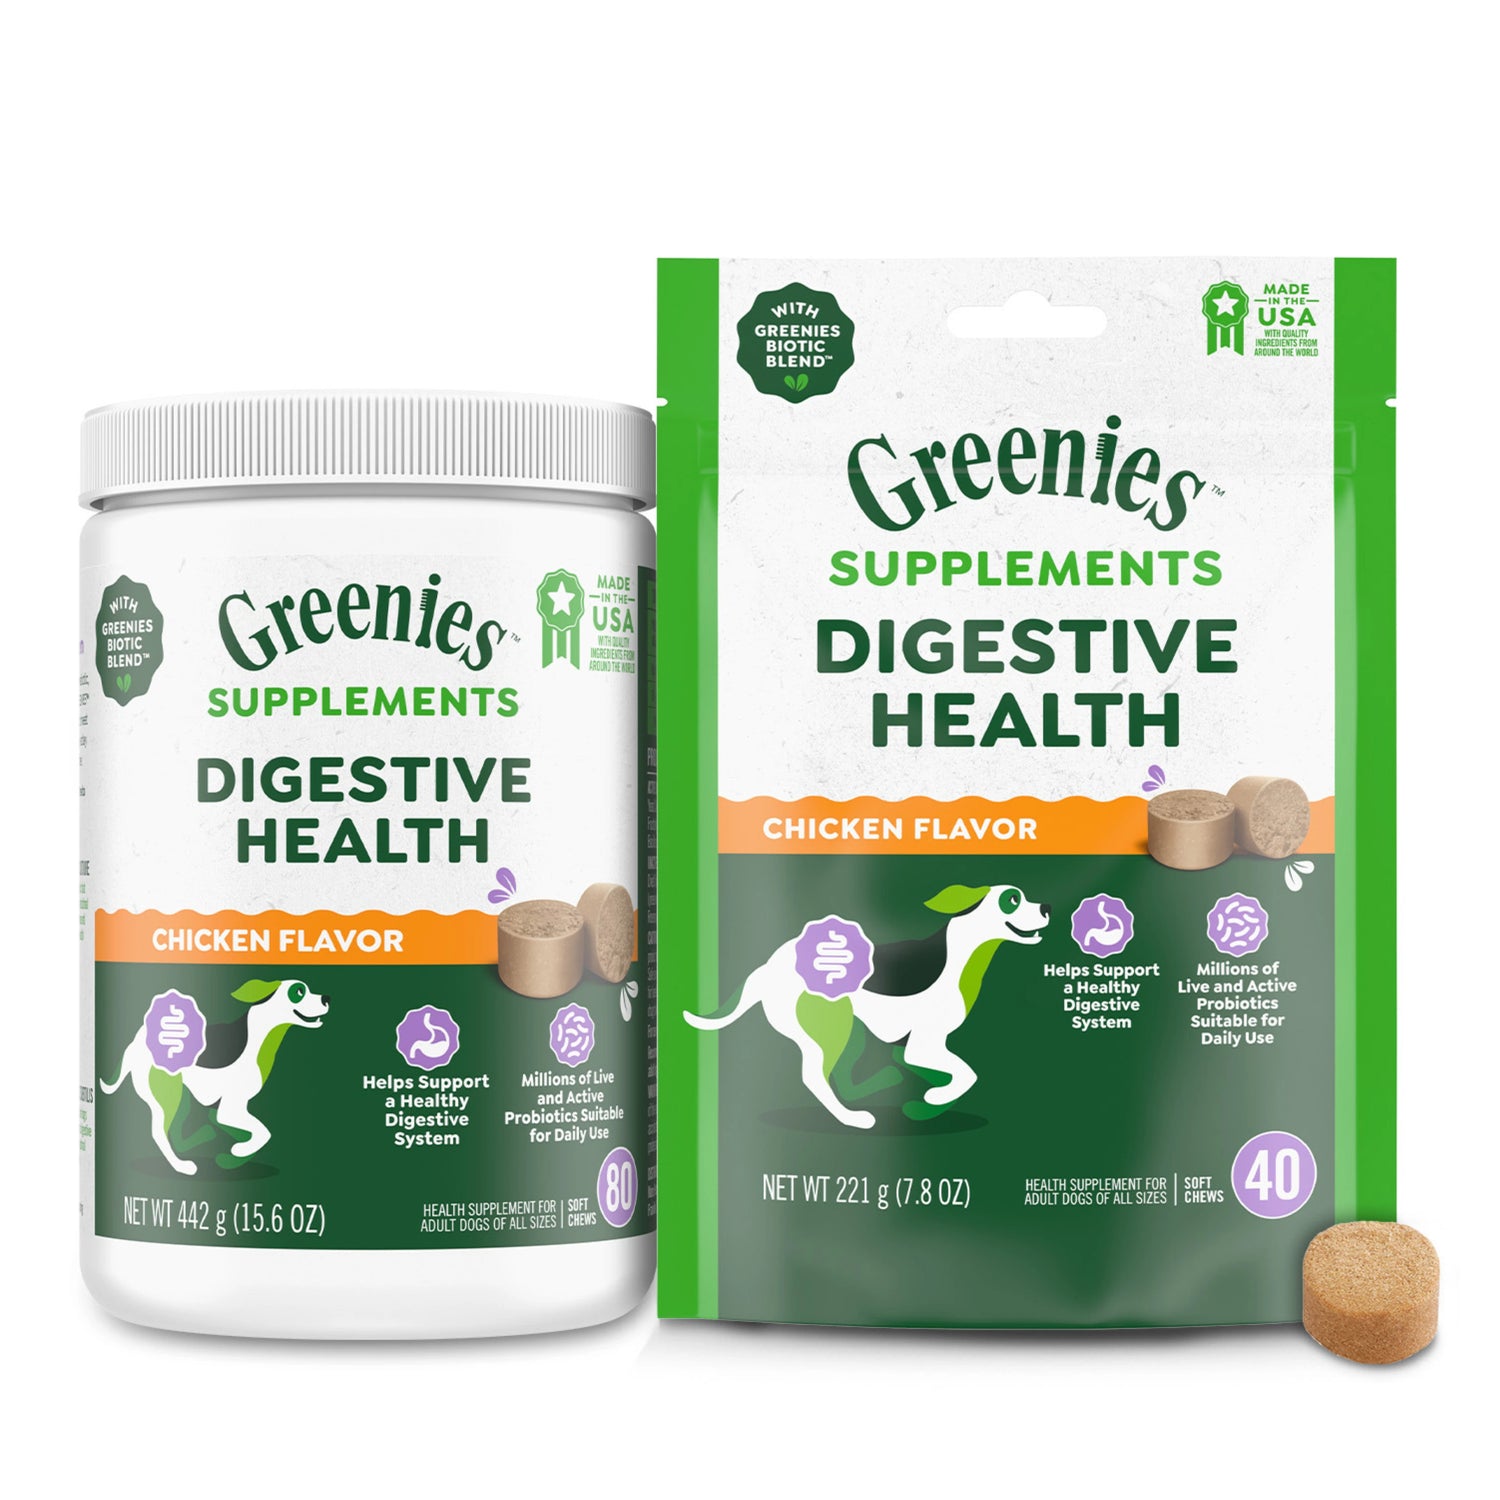 GREENIES Digestive Health Supplements